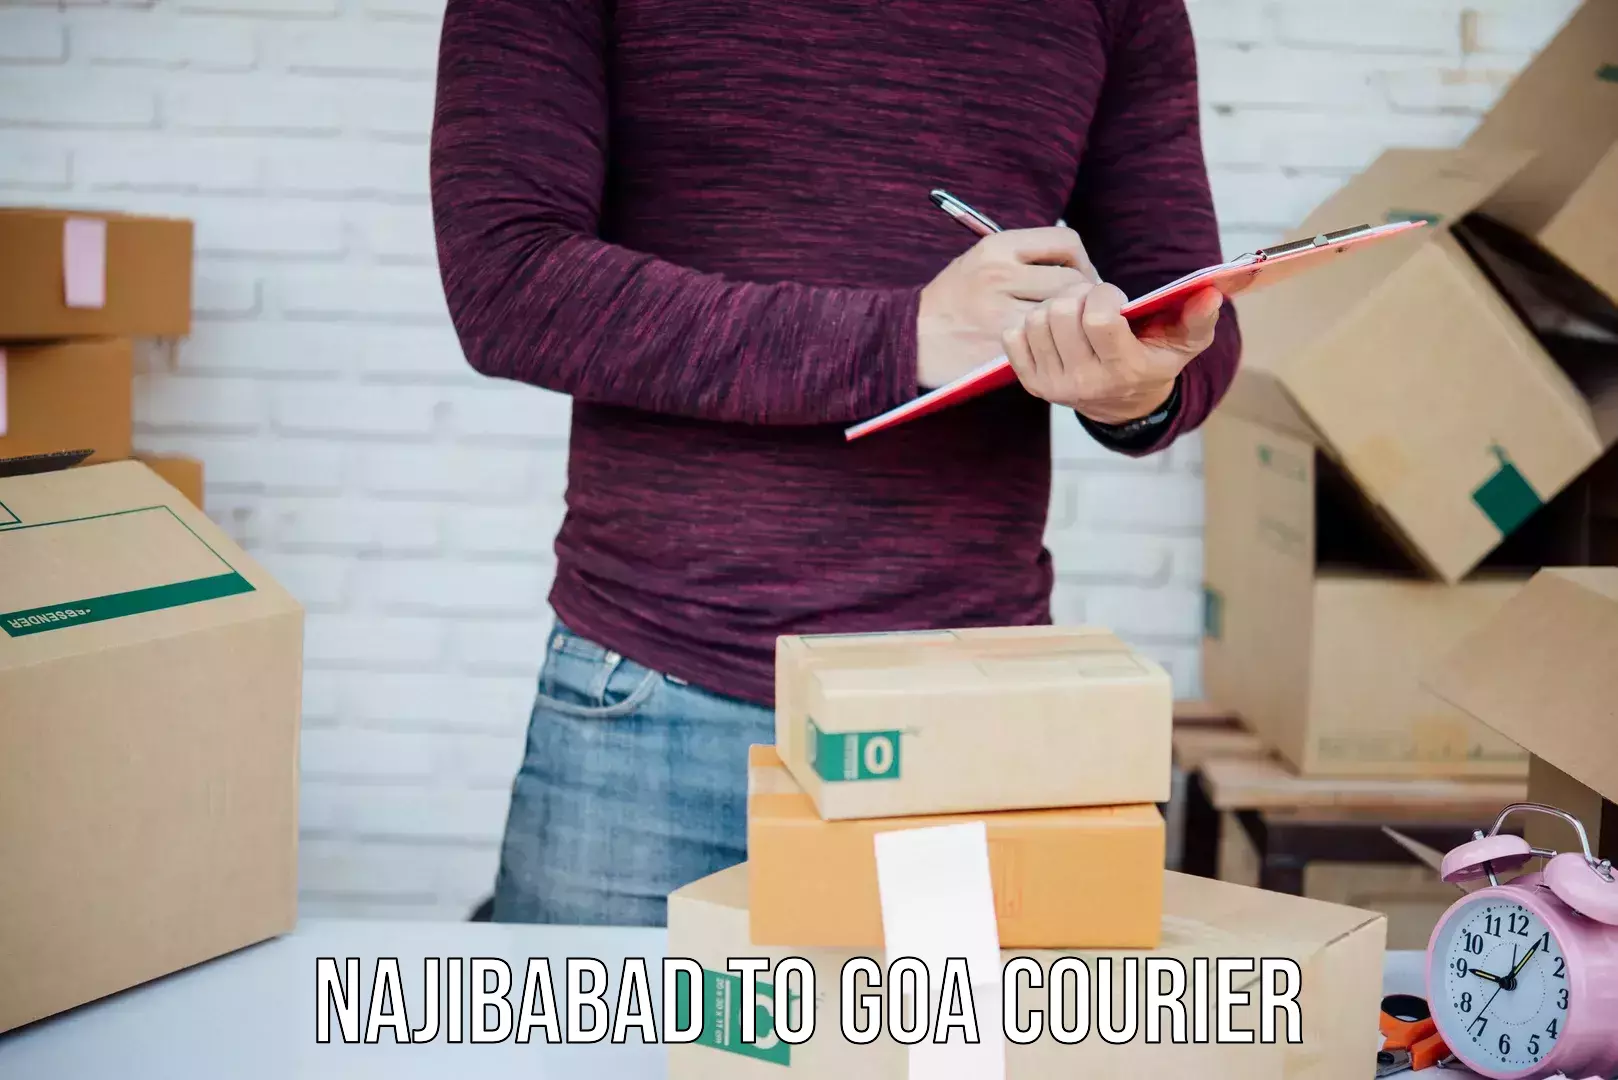 Courier service comparison Najibabad to South Goa